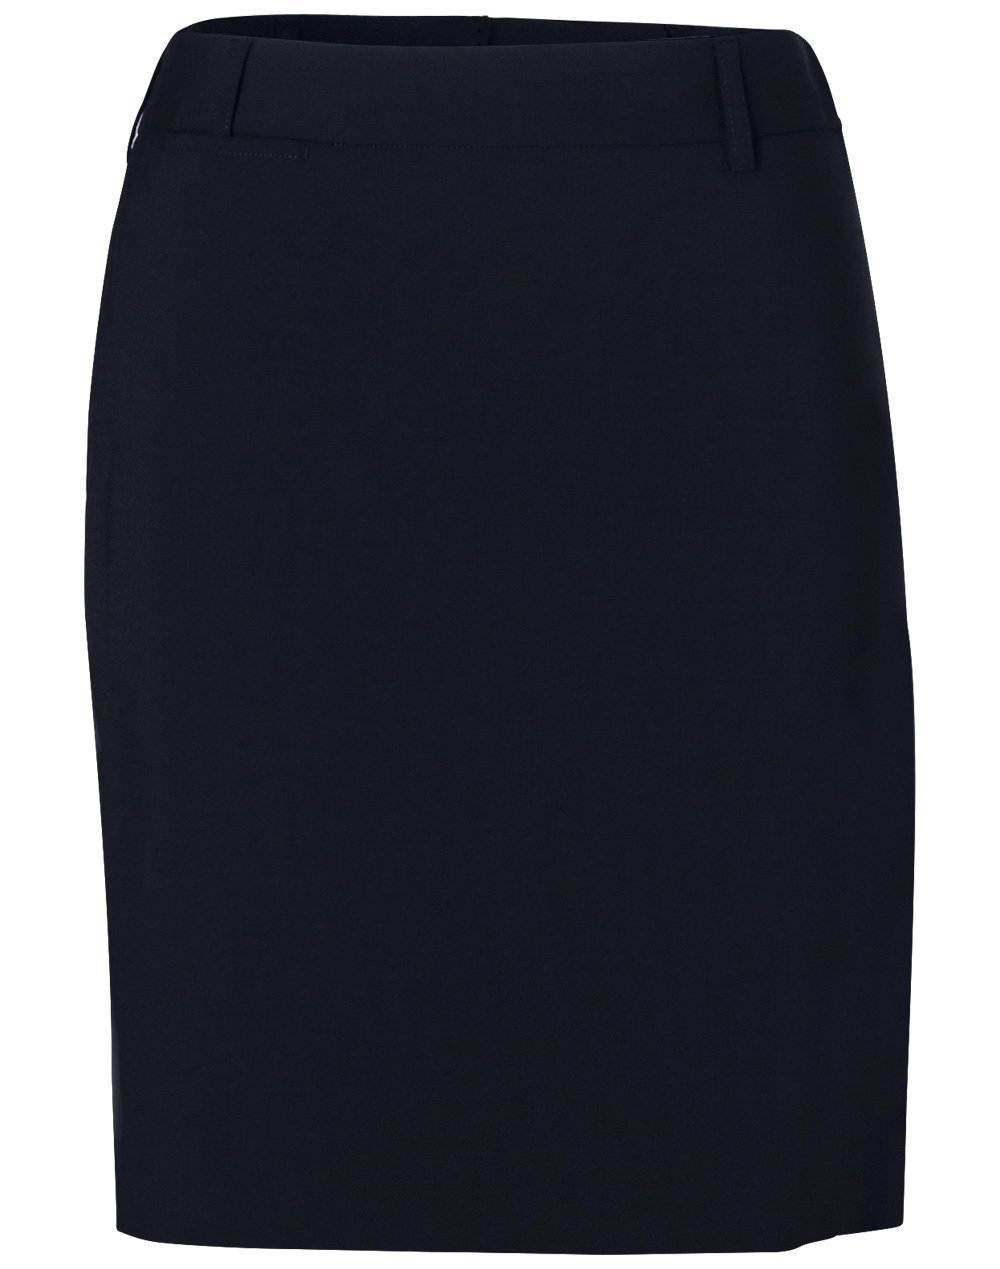 Benchmark M9479 Ladies Utility Skirt